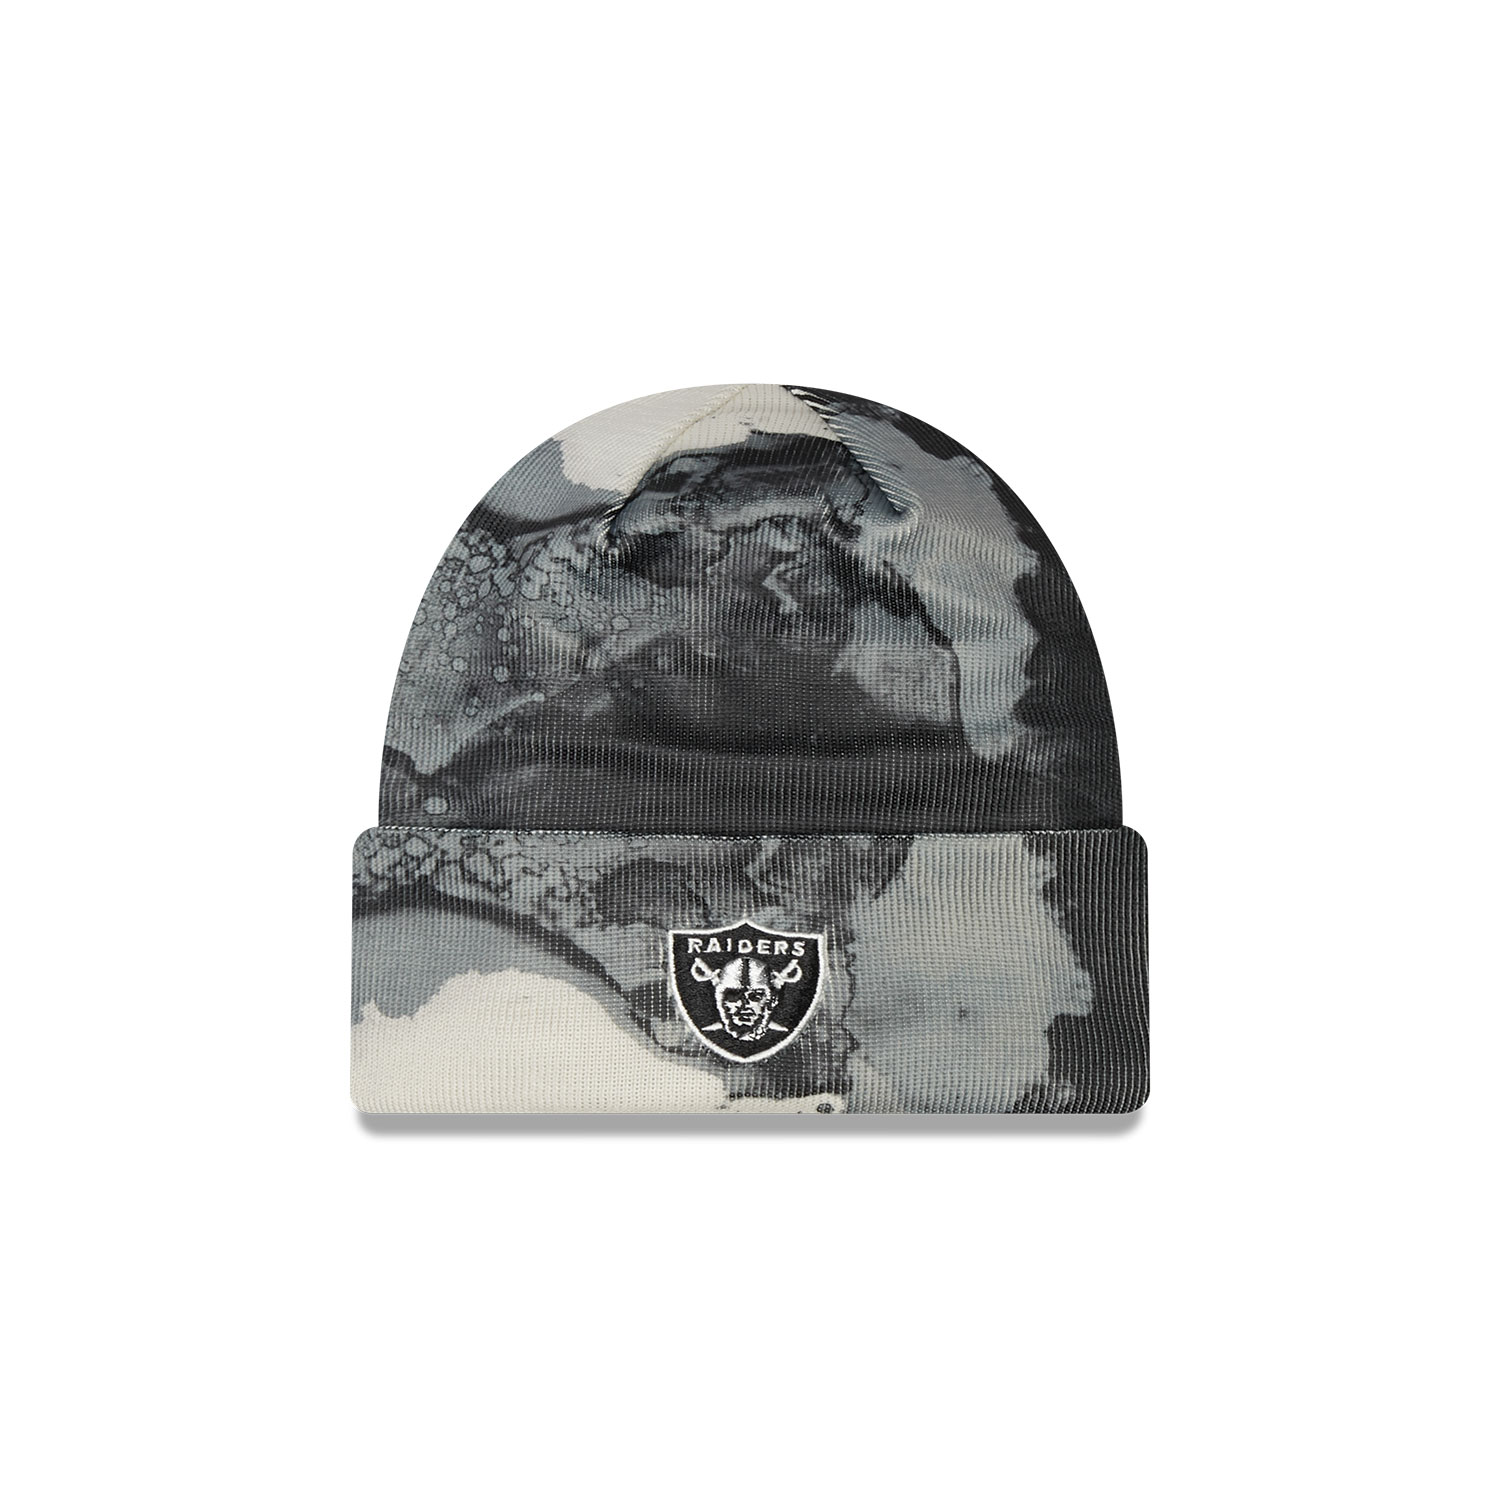 Las Vegas Raiders NFL Sideline Black Beanie Hat